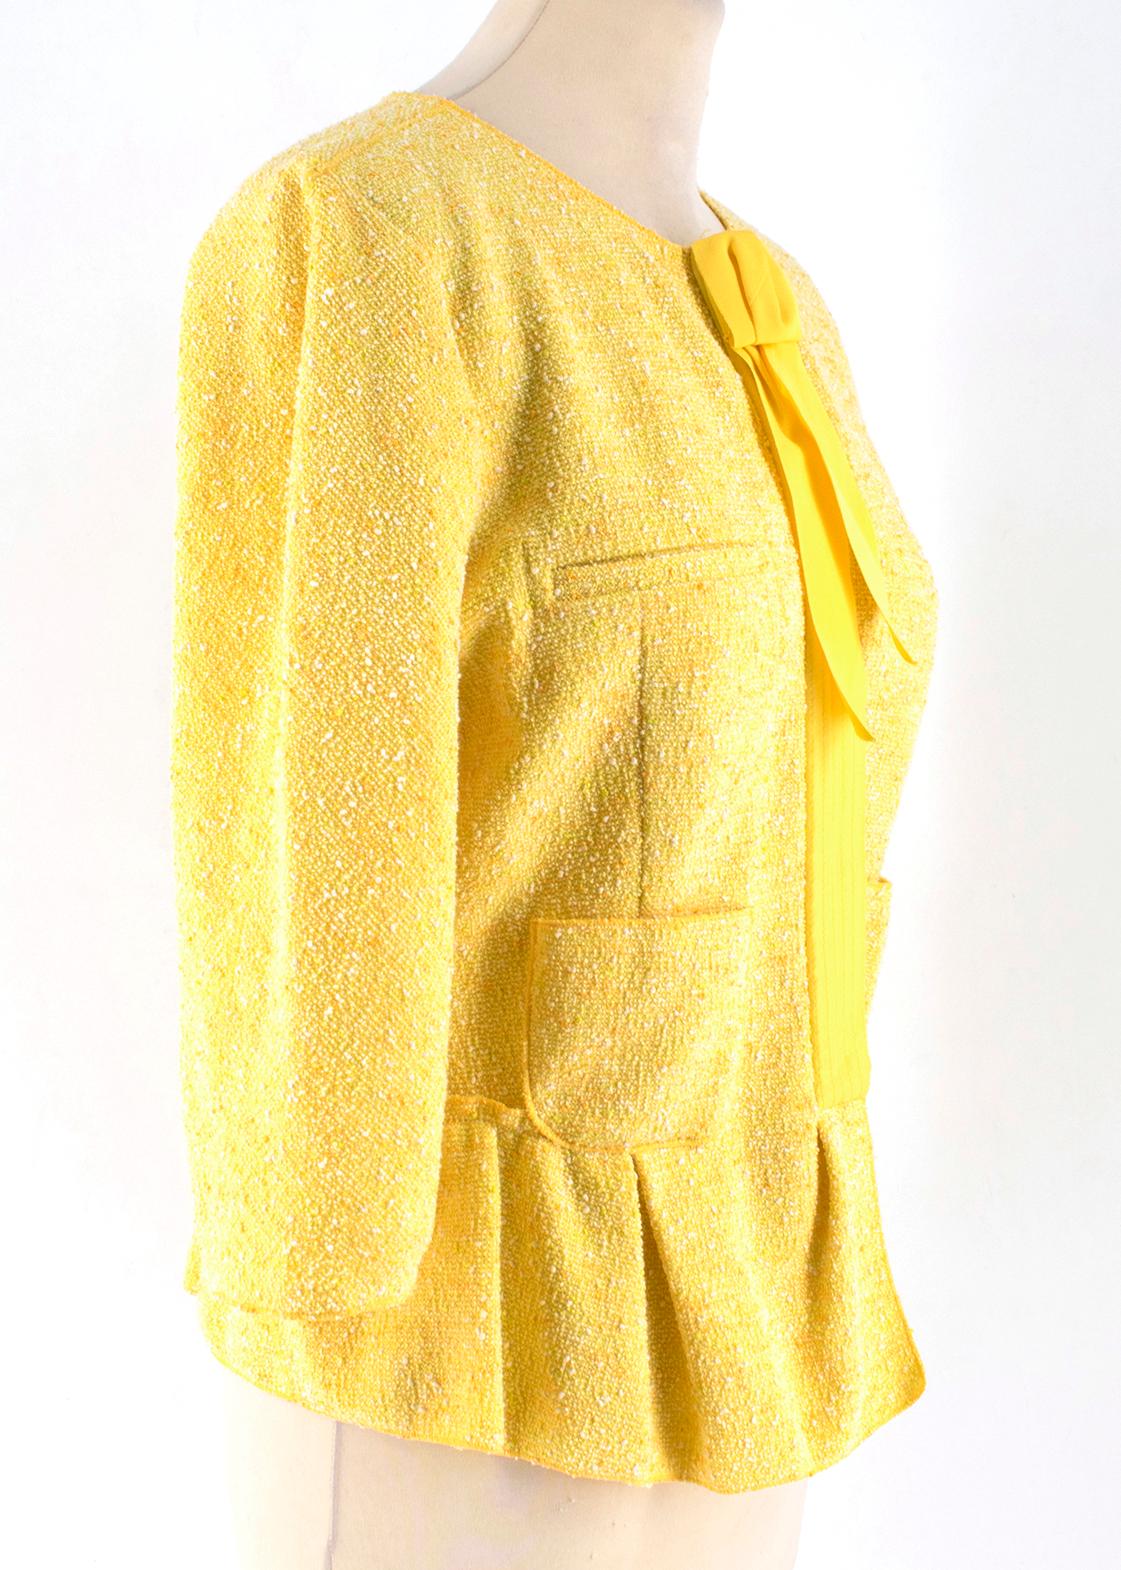 Nina Ricci Yellow Tweed Jacket

- Yellow tweed jacket
- Lightweight
- Crew neck
- Centre-front concealed stud snap fastening
- 3/4 sleeve length
- Front pockets
- Peplum hem
- 70% cotton, 15% viscose, 12% polyamide, 3% elastan

Please note, these